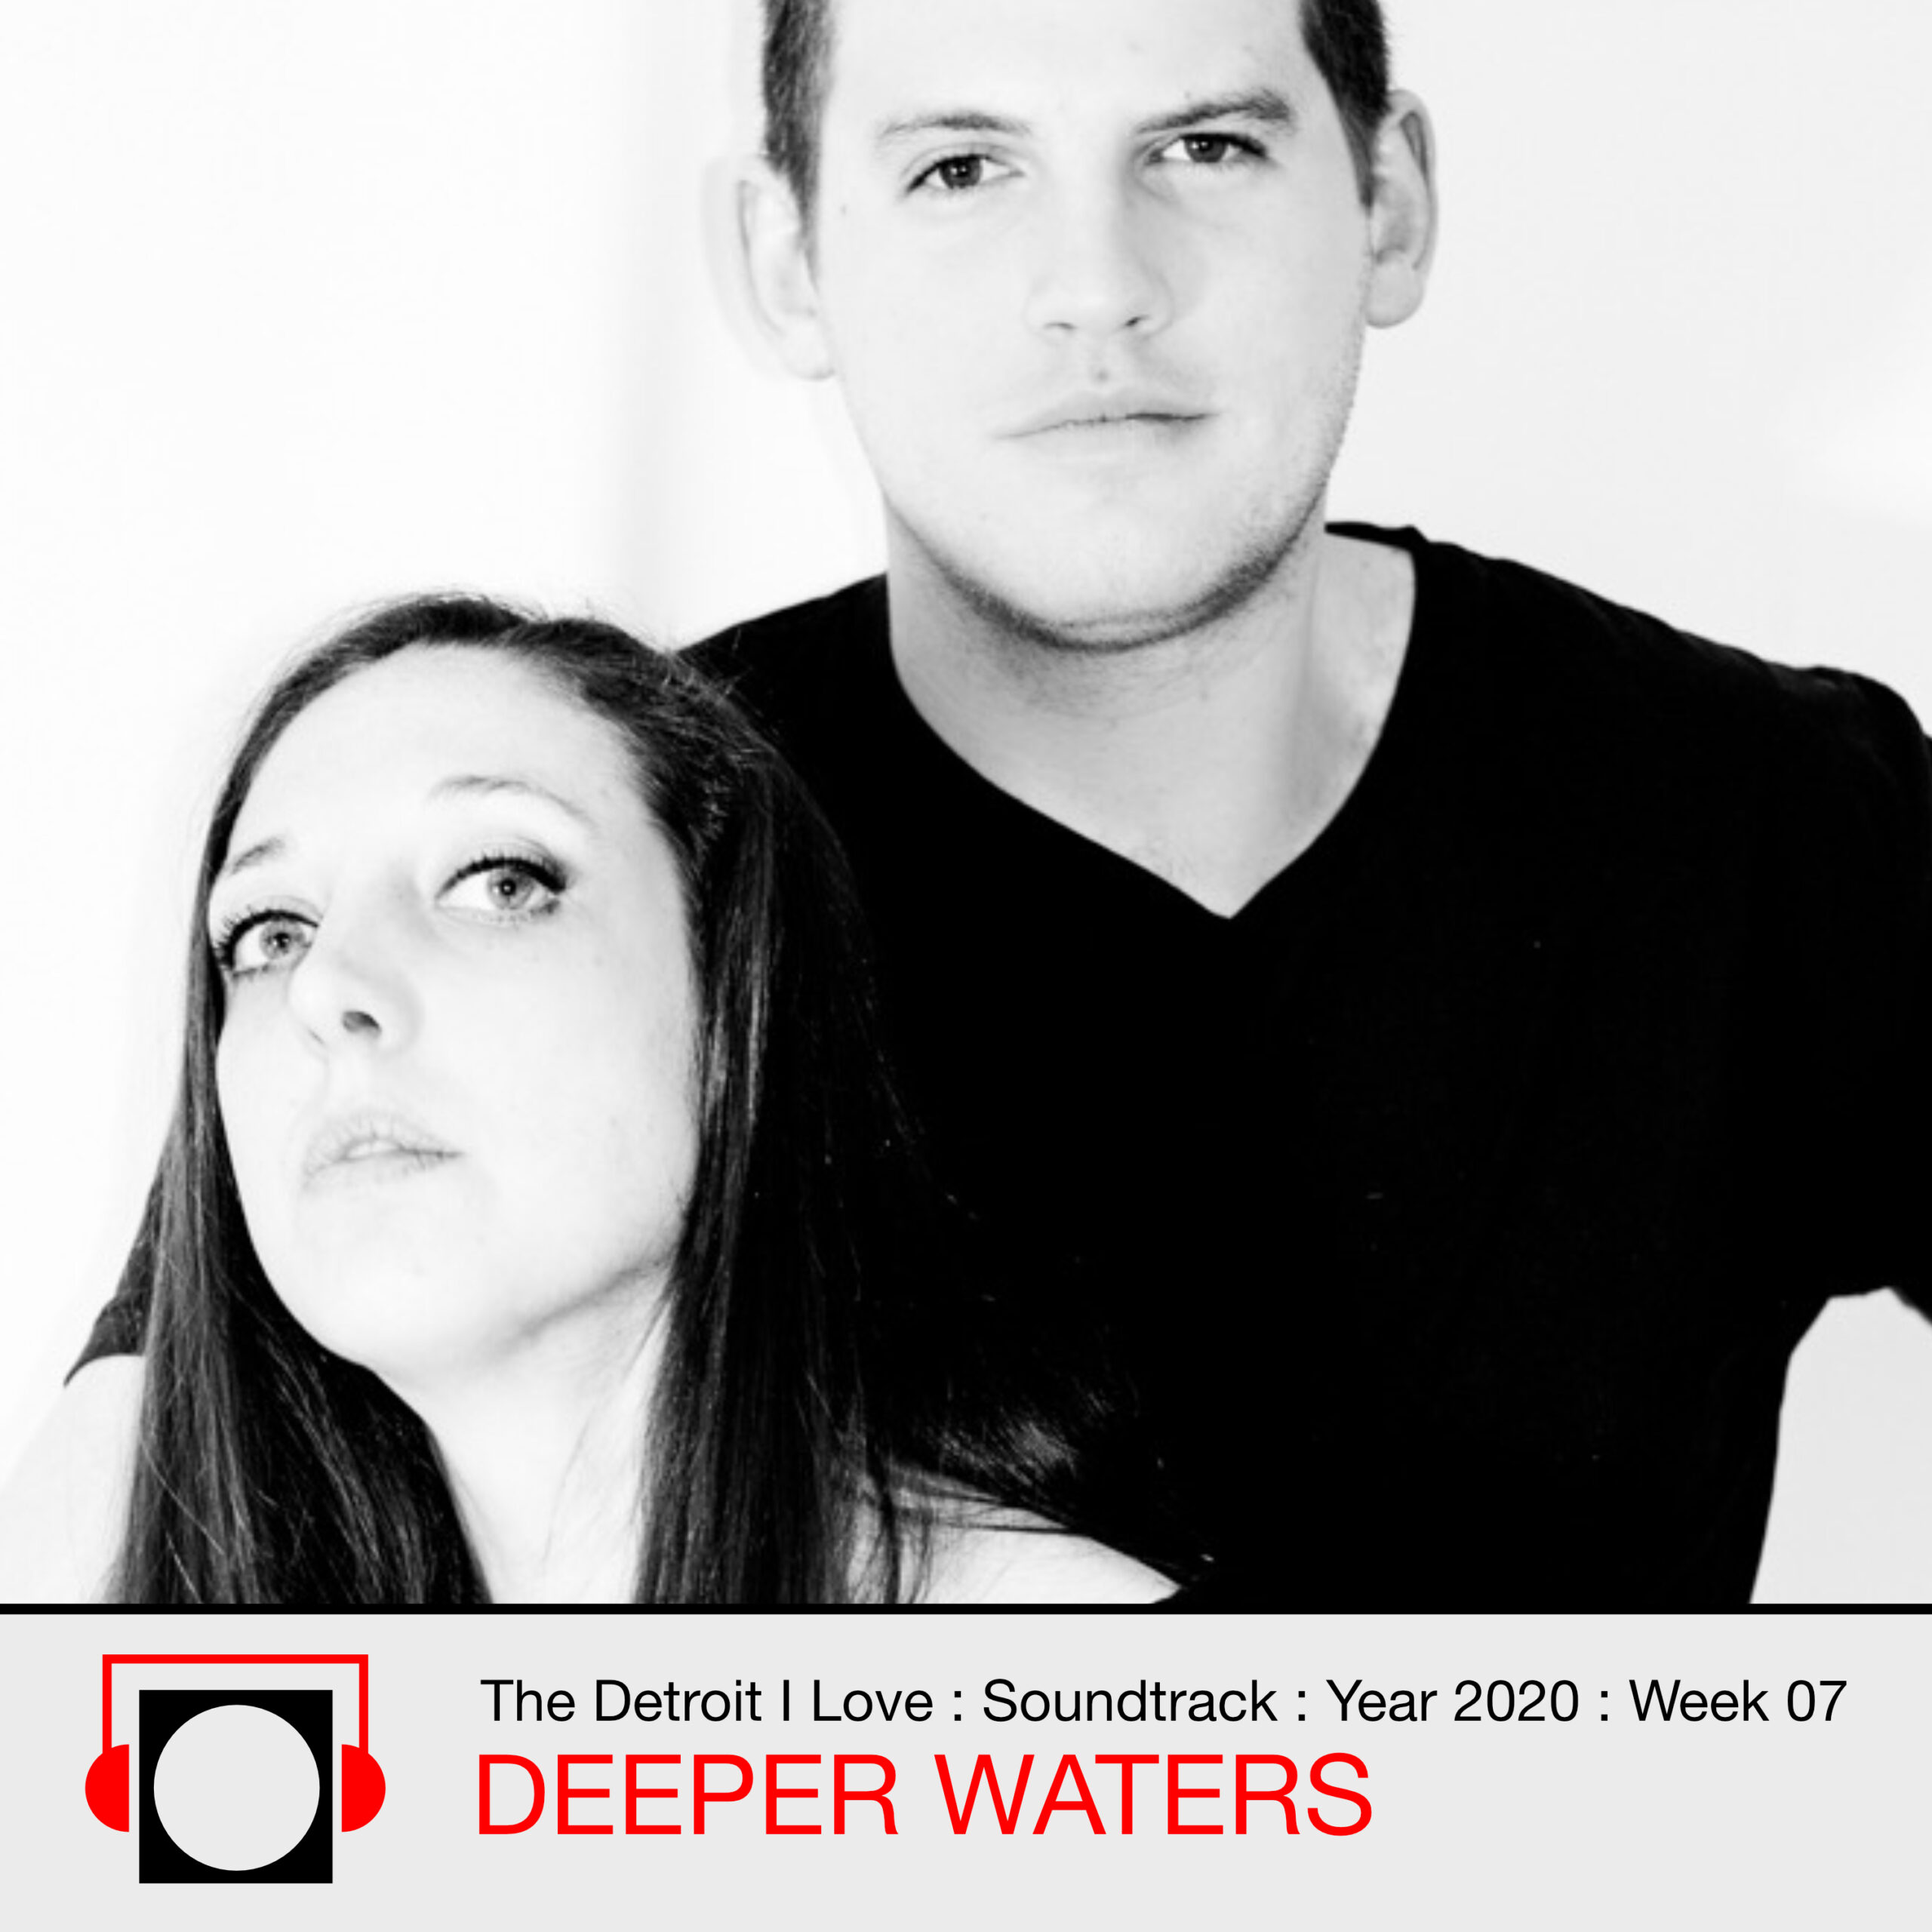 Soundtrack : Deeper Waters